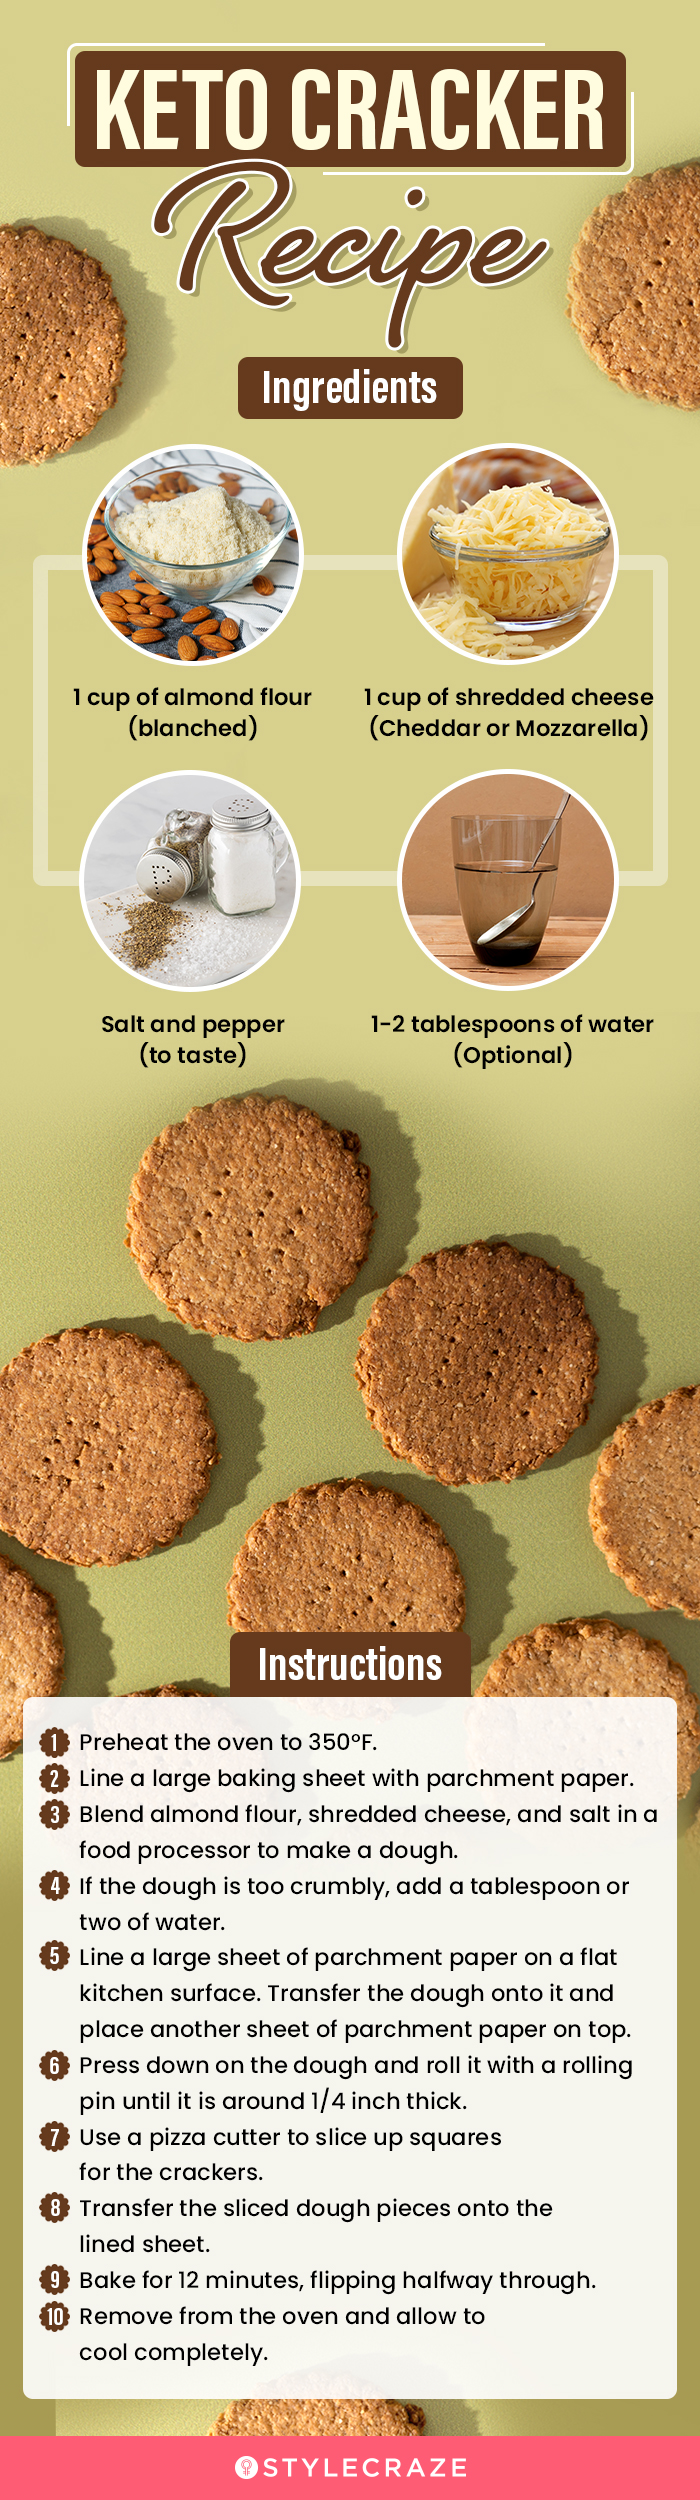 keto cracker recipe (infographic)